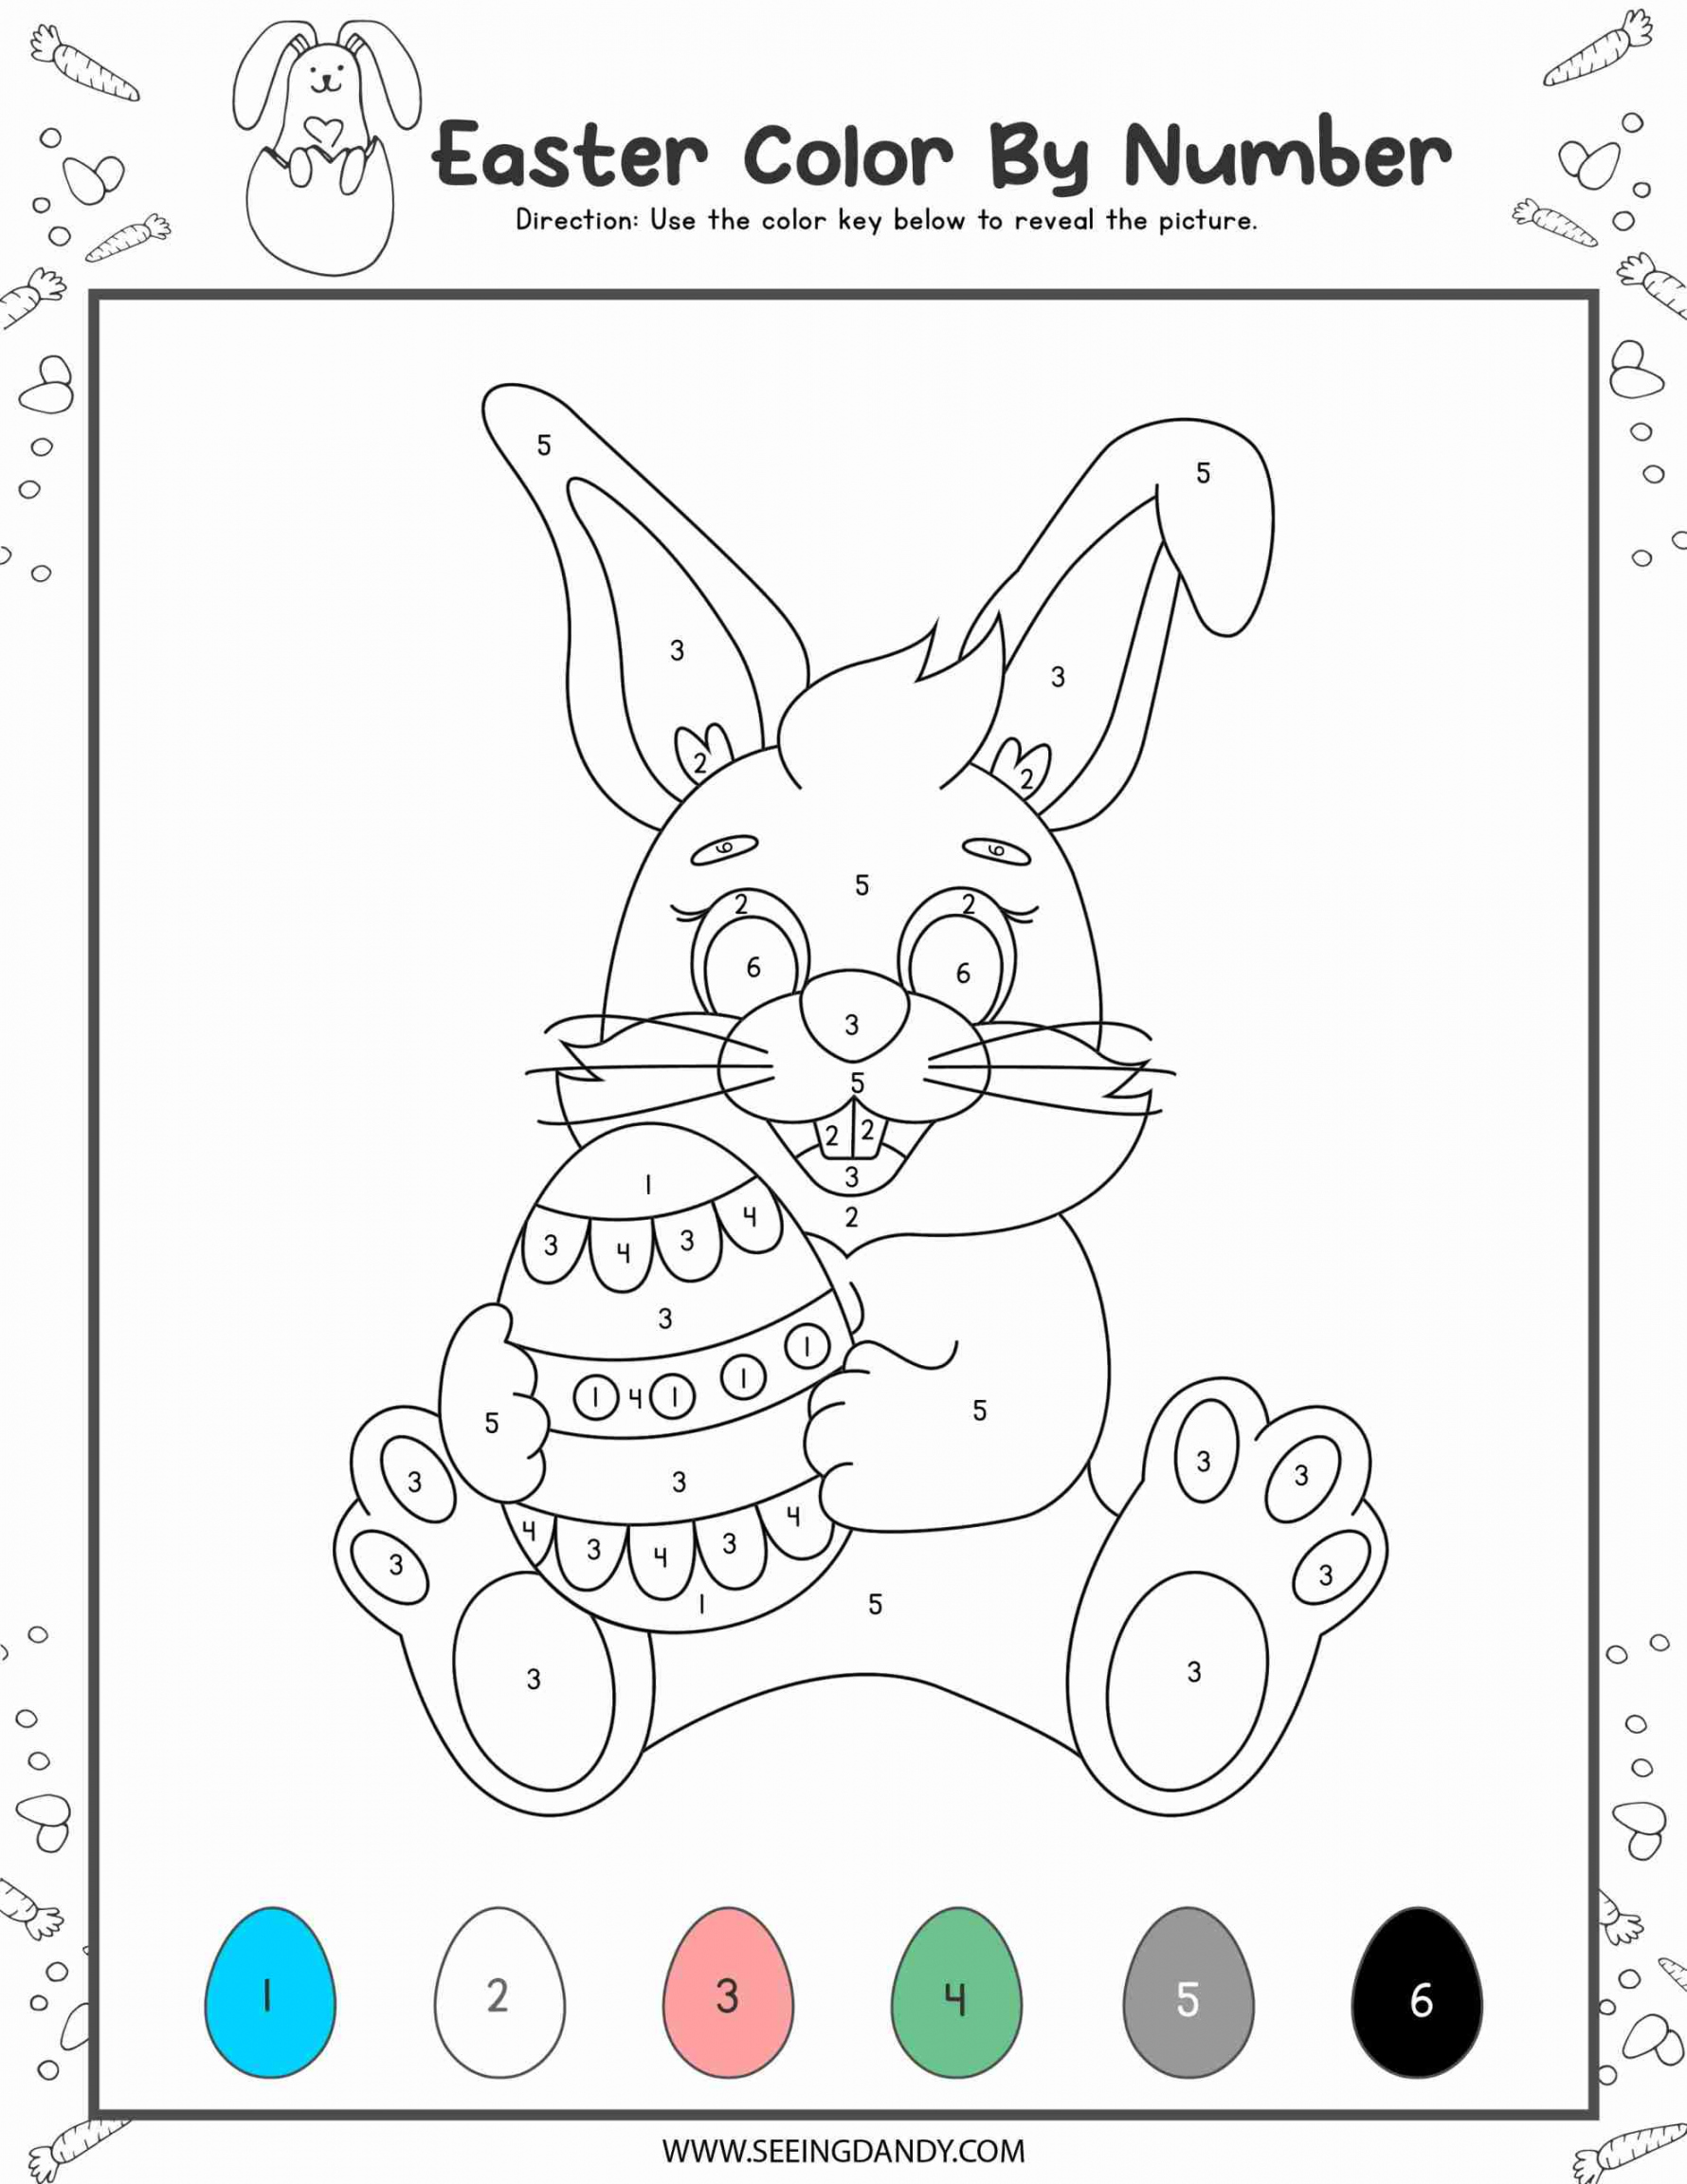 Color By Number Free Printables - Printable - Free Printable Easter Color By Number Coloring Pages - Seeing